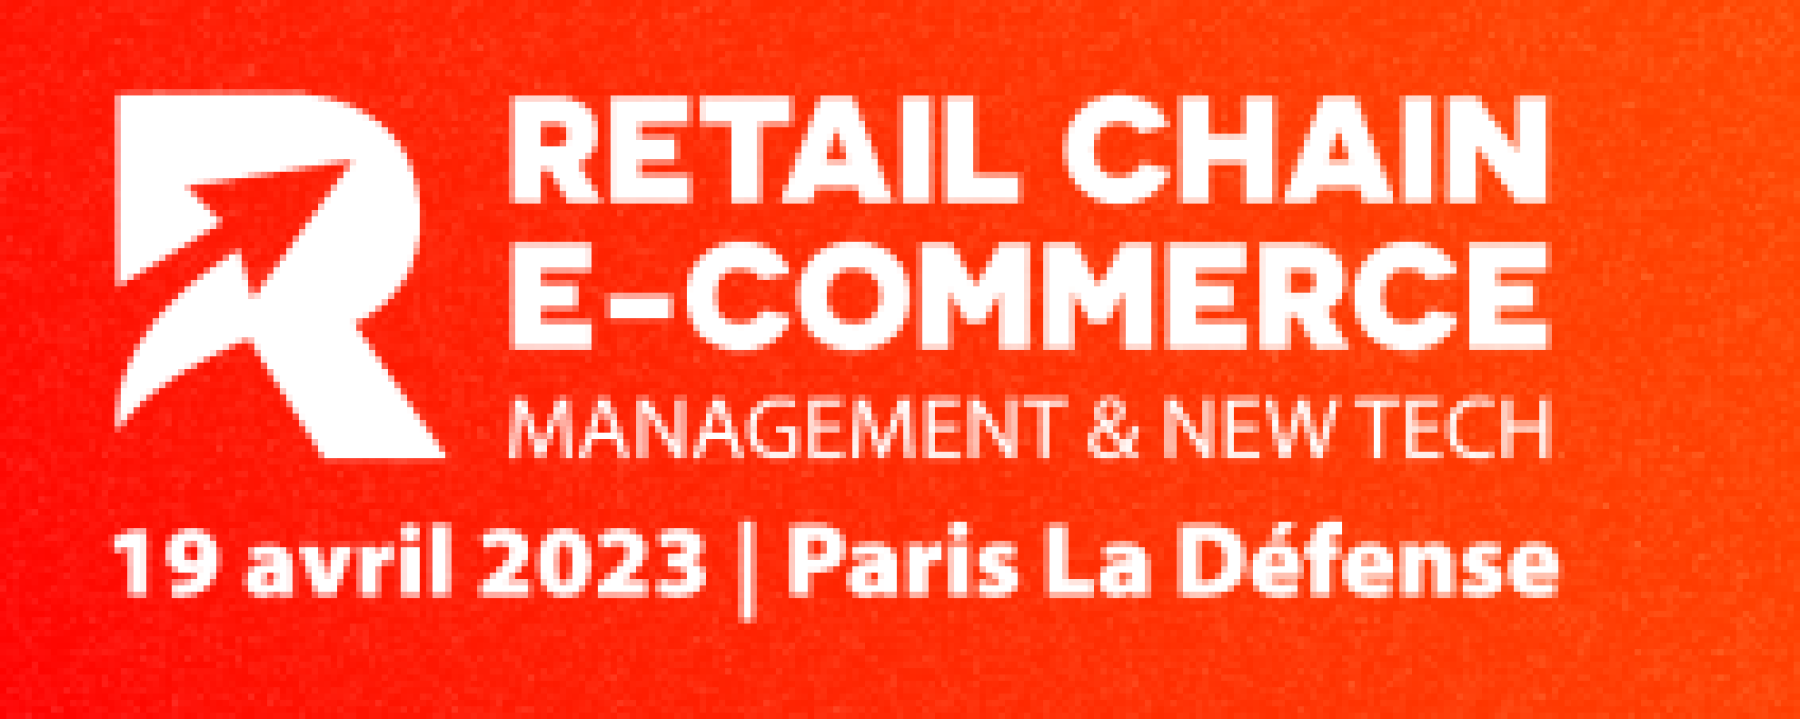 Retail Chain E-commerce 2023